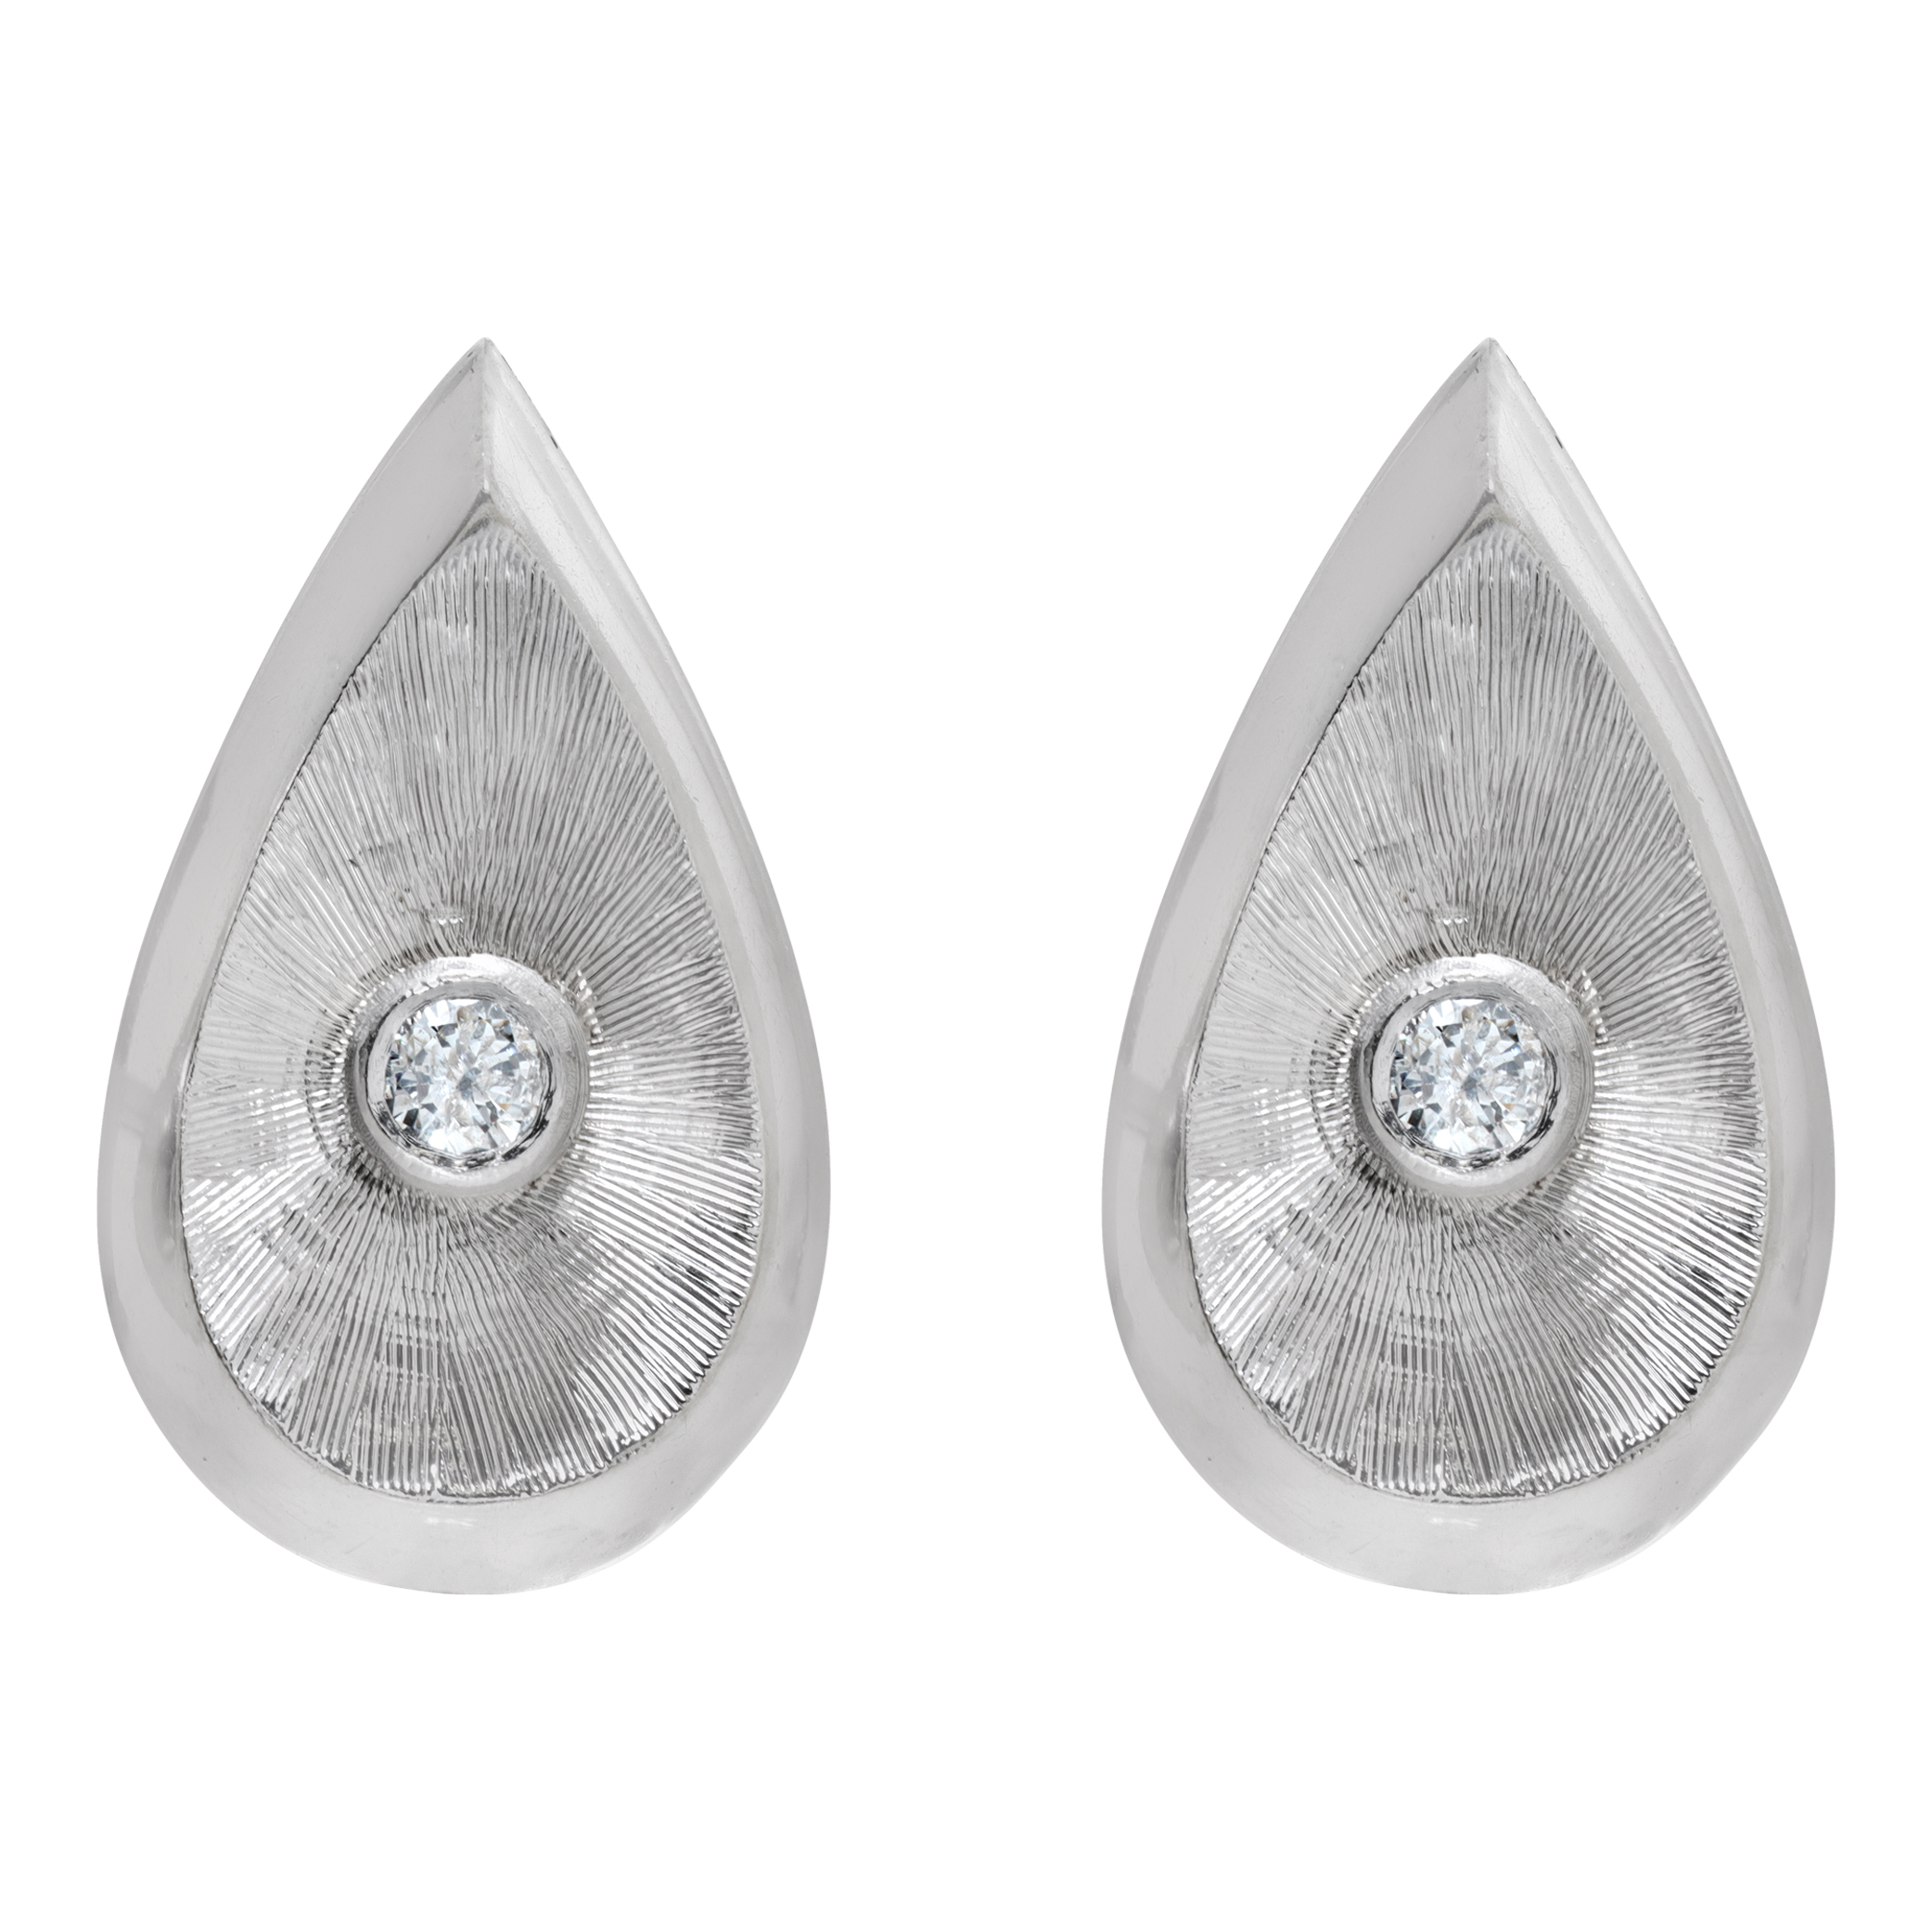 Tear drop shaped 14k white gold cufflinks with center round bezel set diamond (Stones)